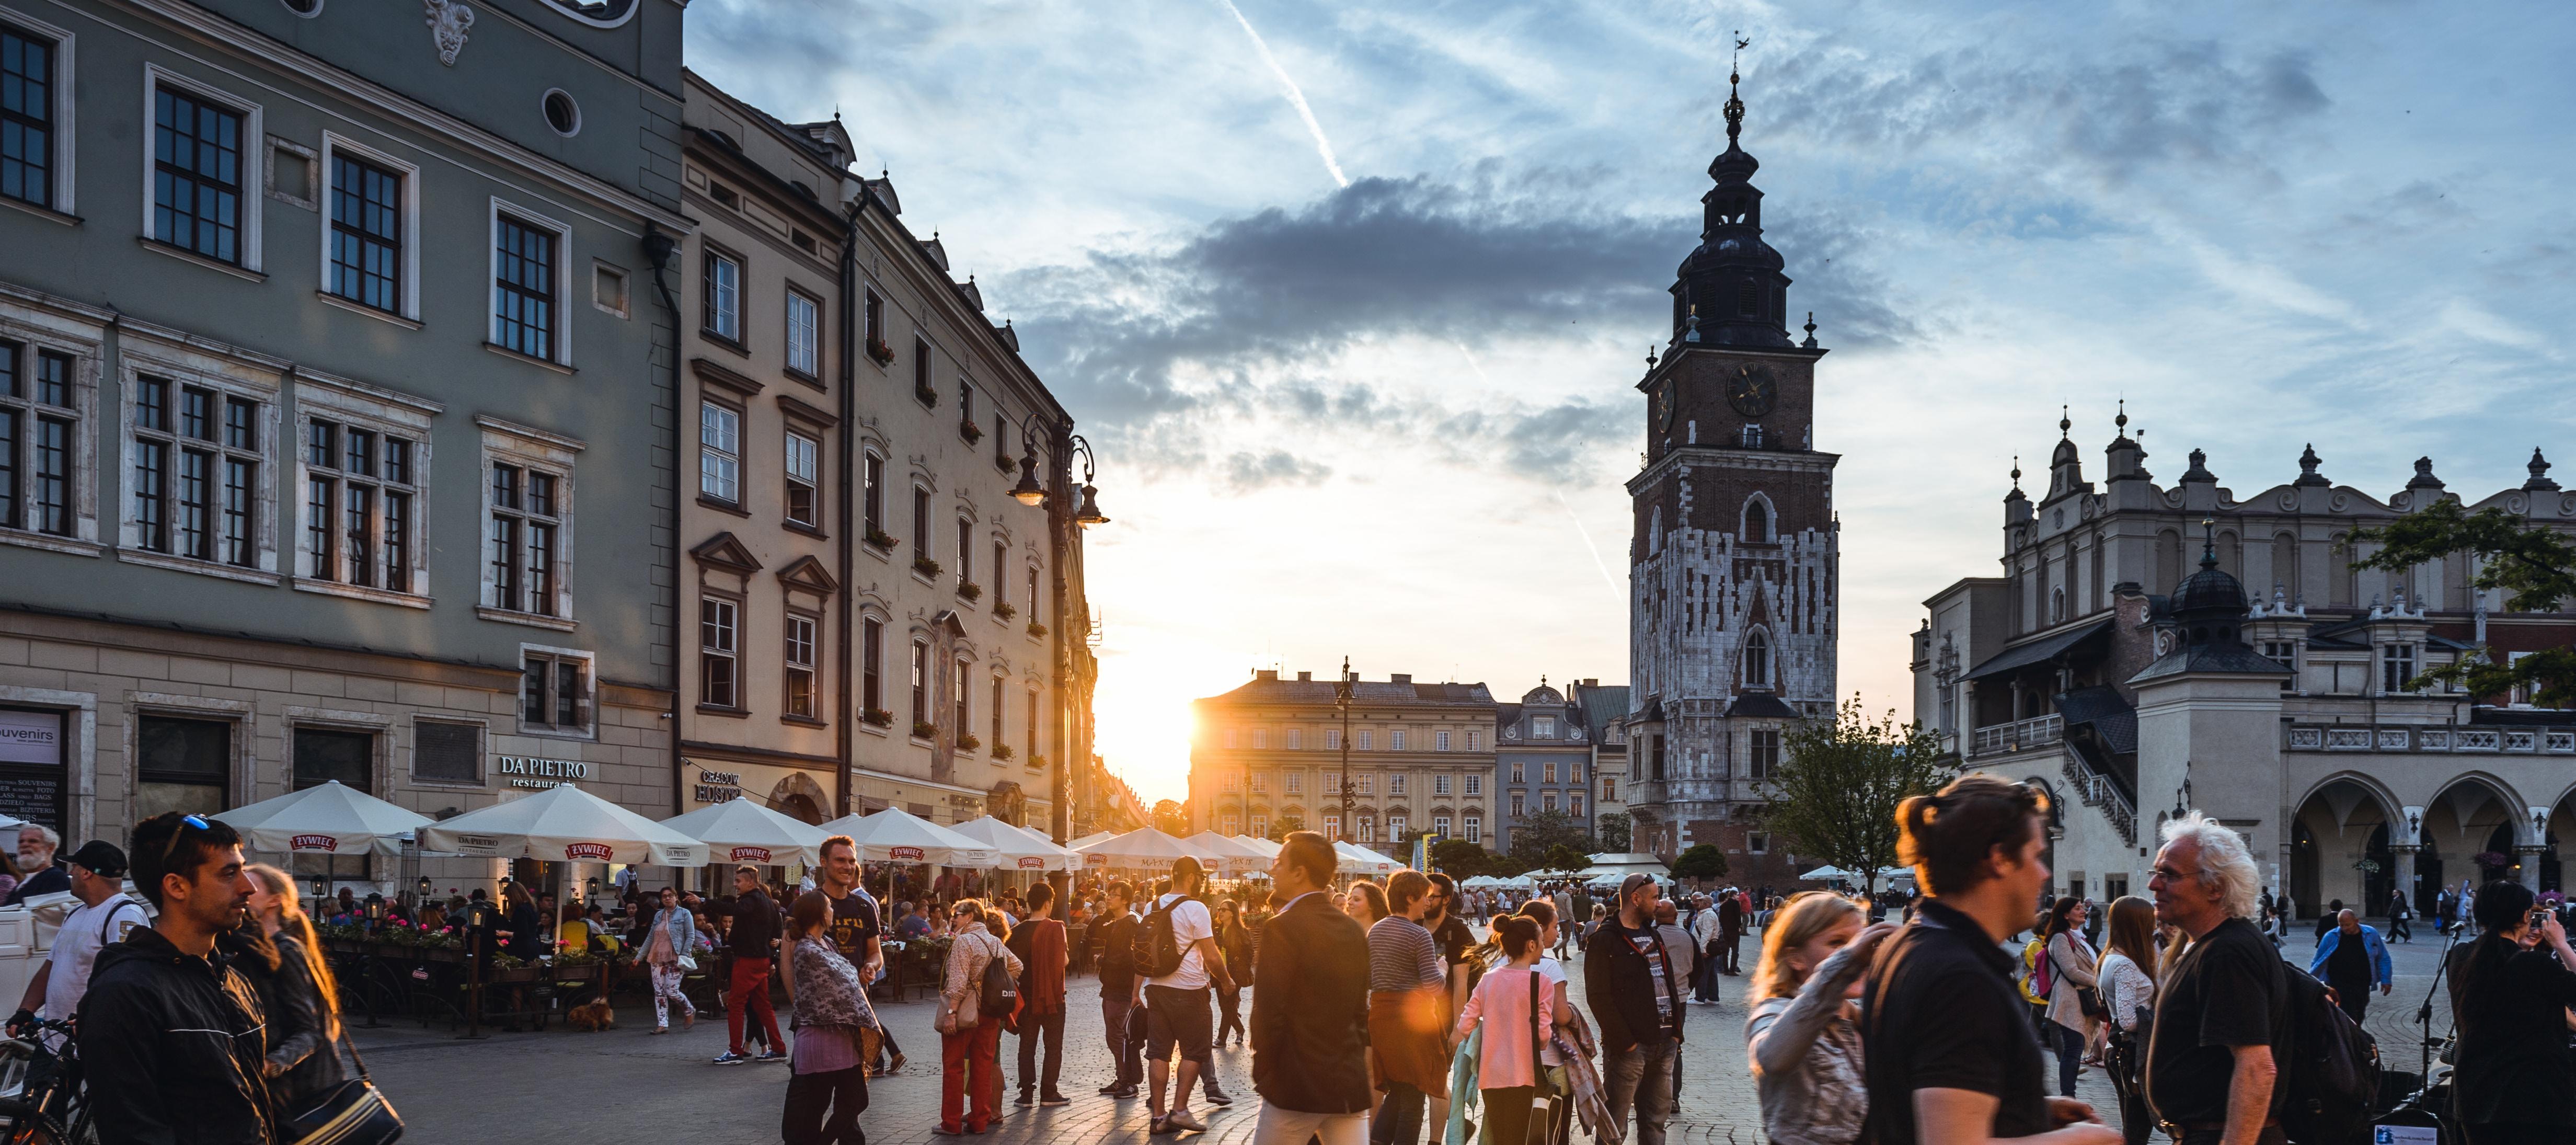 Rynek Główny in Krakow | 5 Destinations on Every European City Break Bucket list